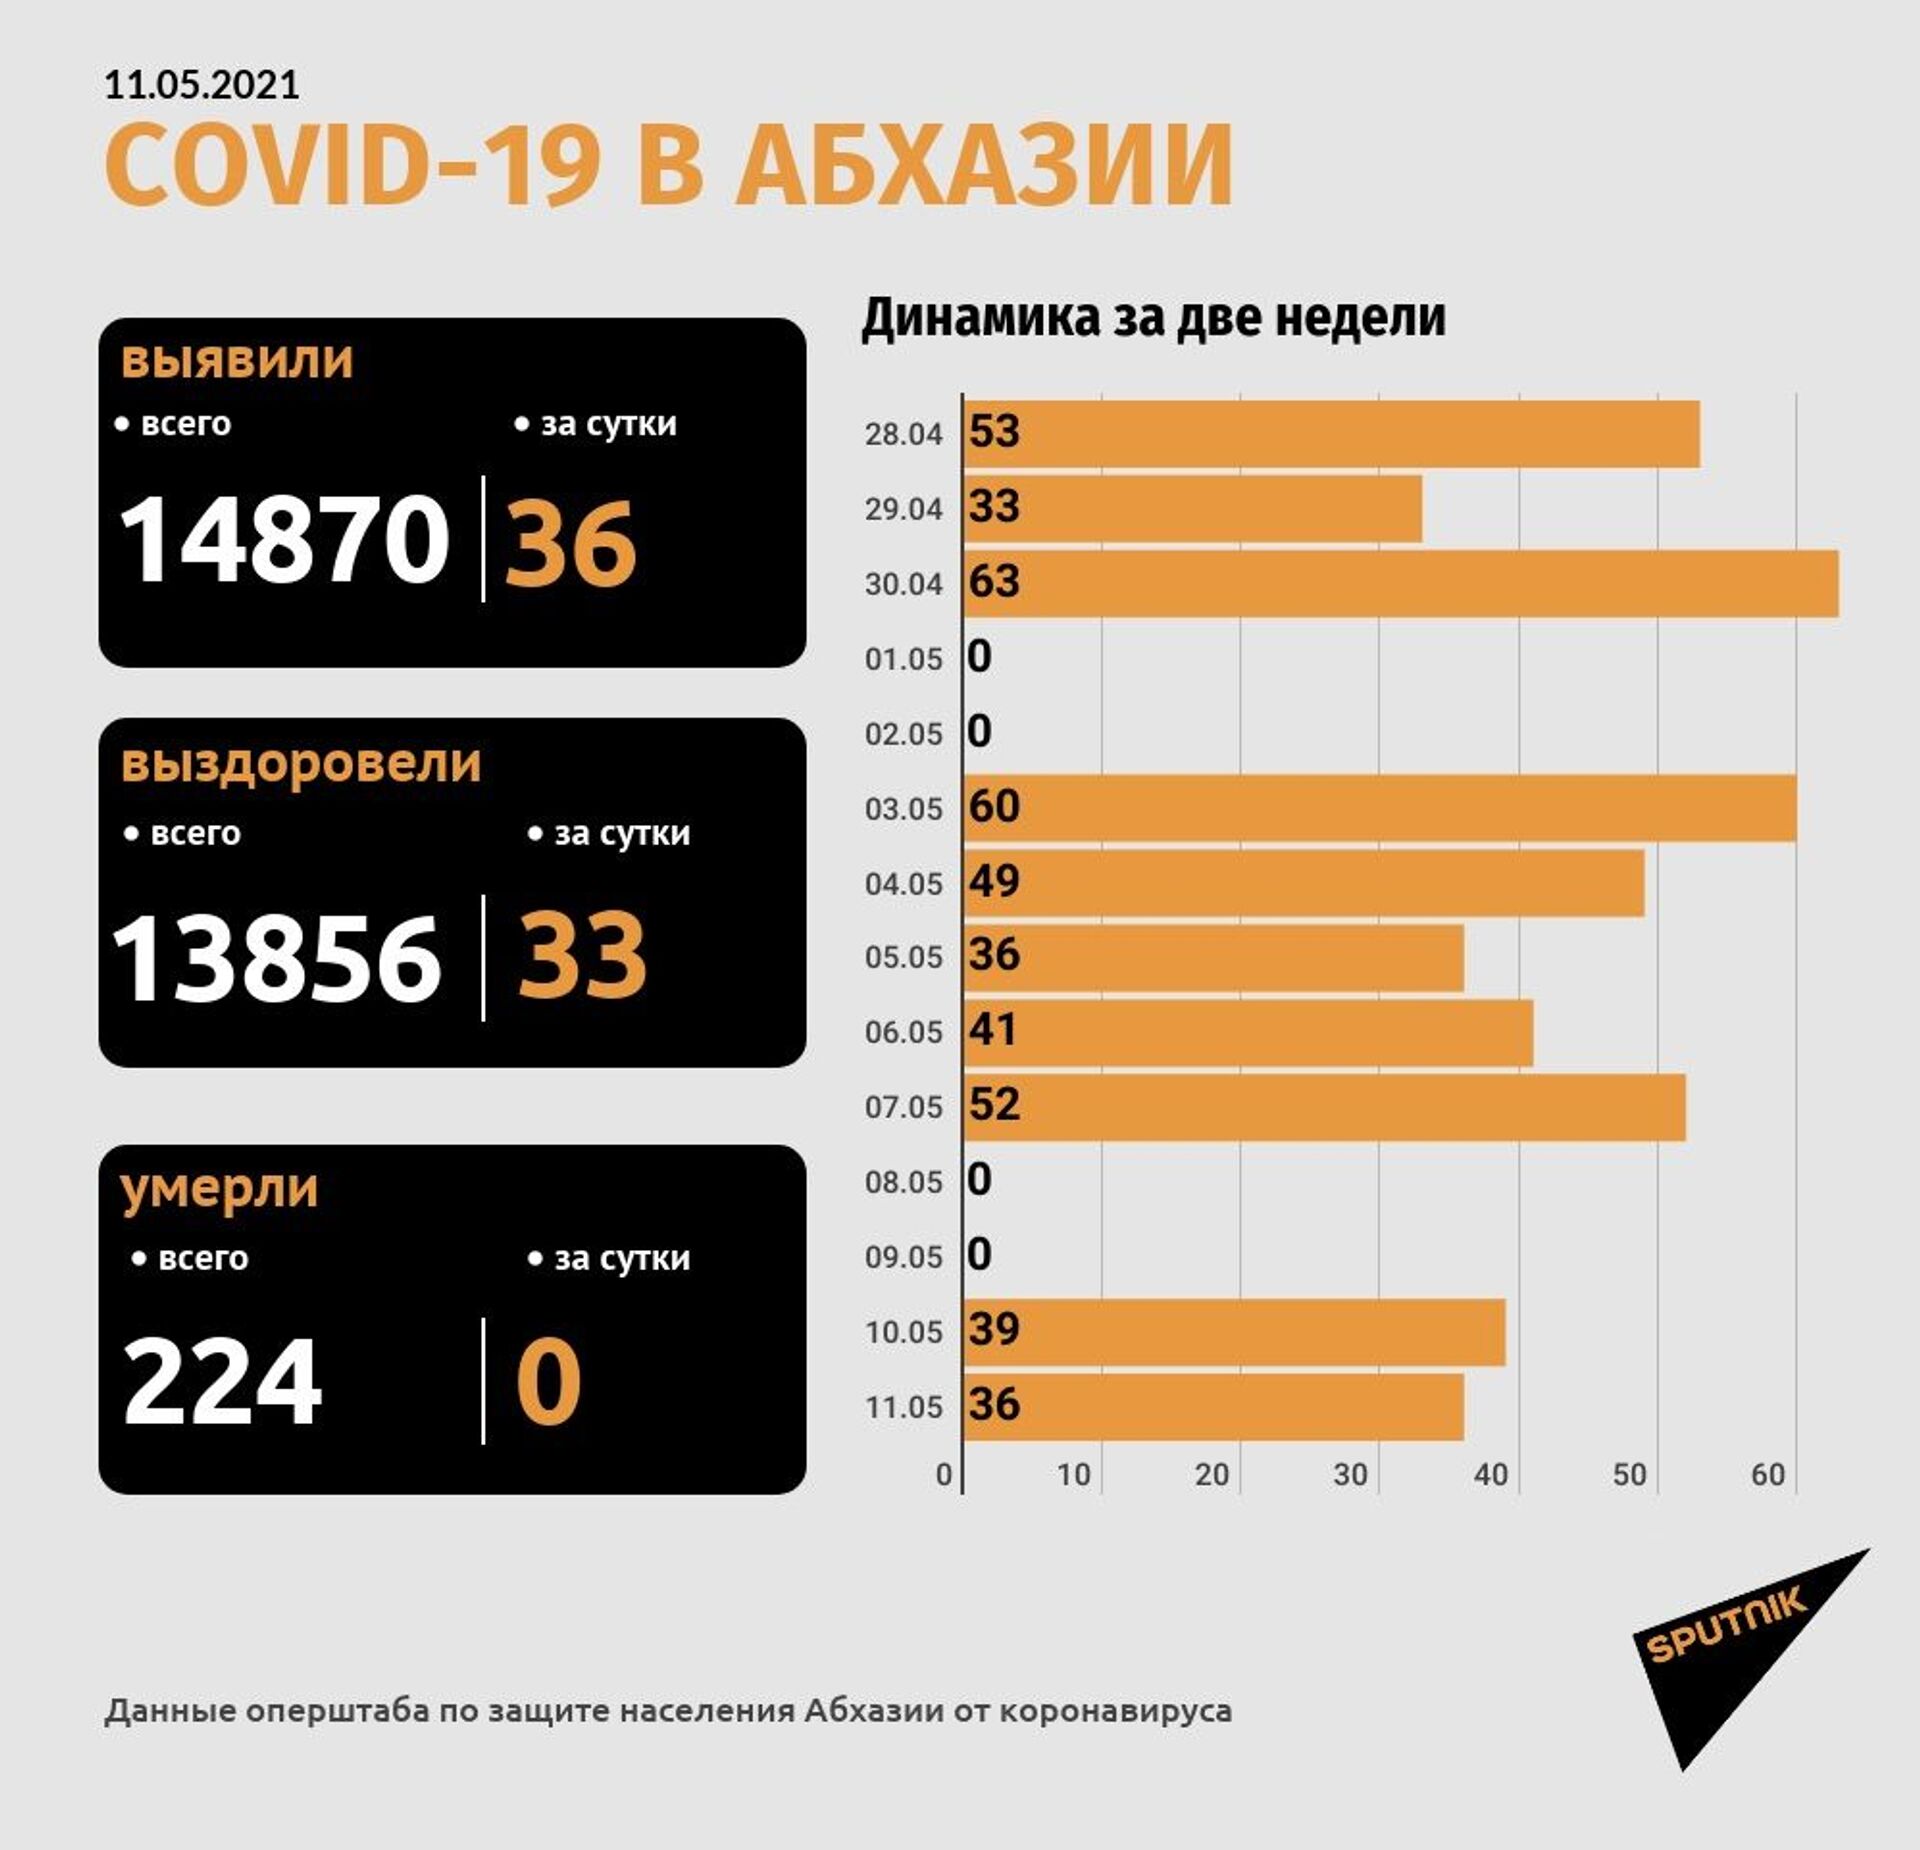 В Абхазии выявлено 36 заражений коронавирусом за минувшие сутки - Sputnik Абхазия, 1920, 11.05.2021